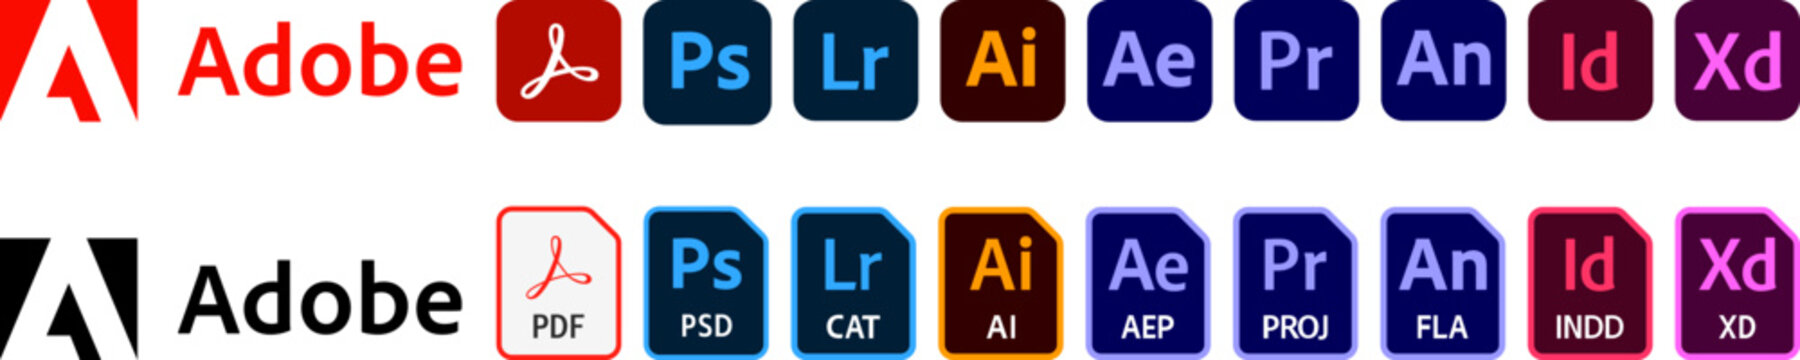 Adobe Products file logo set. Acrobat DC, PDF, Photoshop, Lightroom, Illustrator, After Effects, Premiere Pro, Animate, InDesign icons. Vector editorial illustration